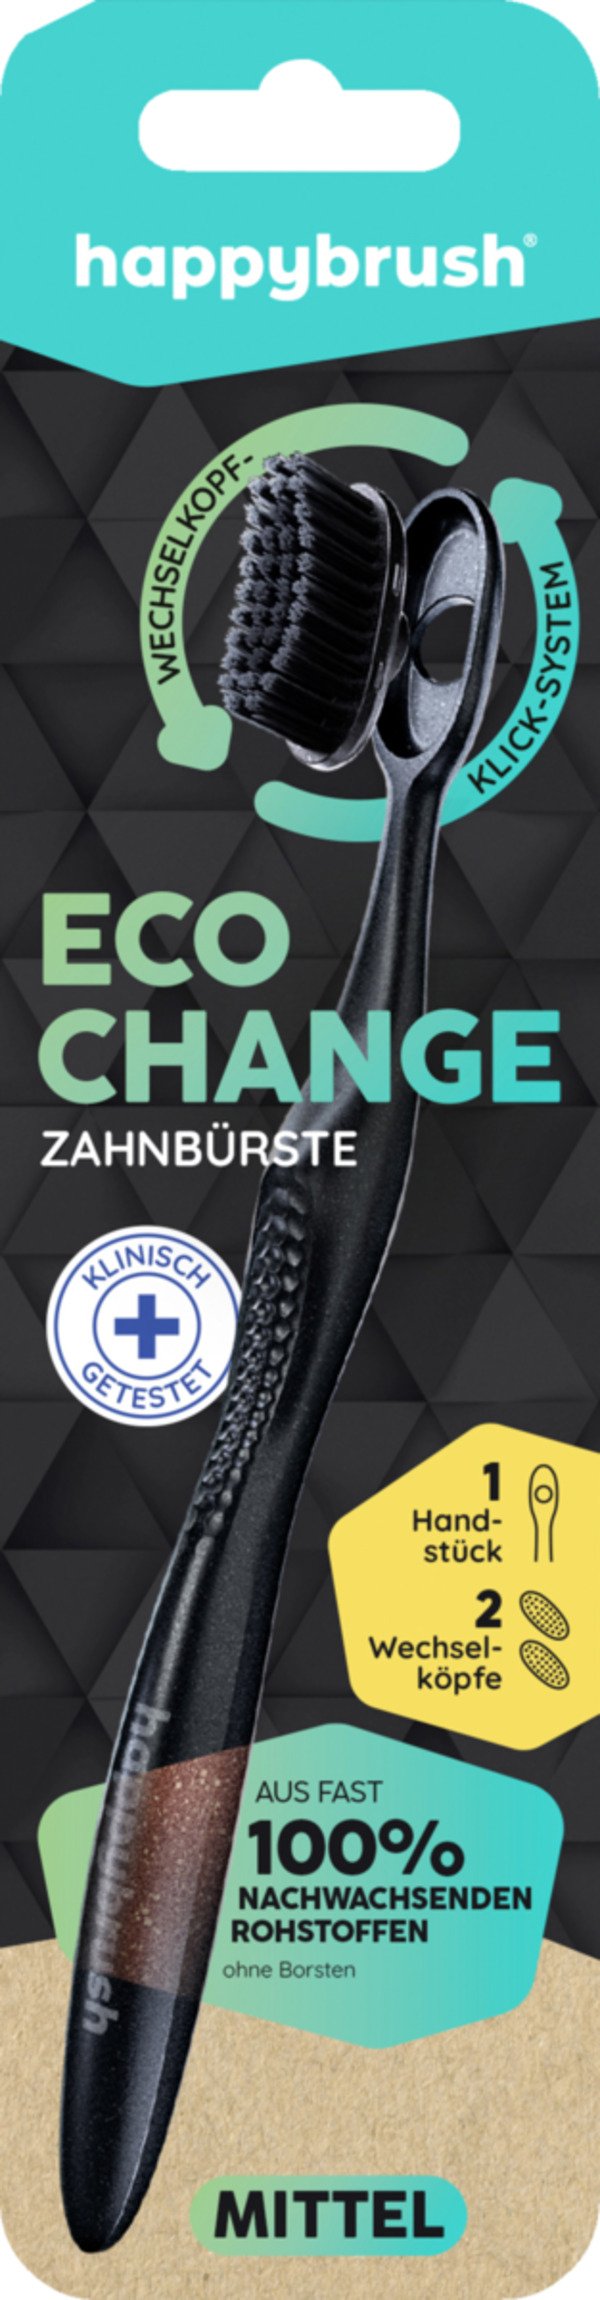 Bild 1 von happybrush Eco Change Zahnbürste